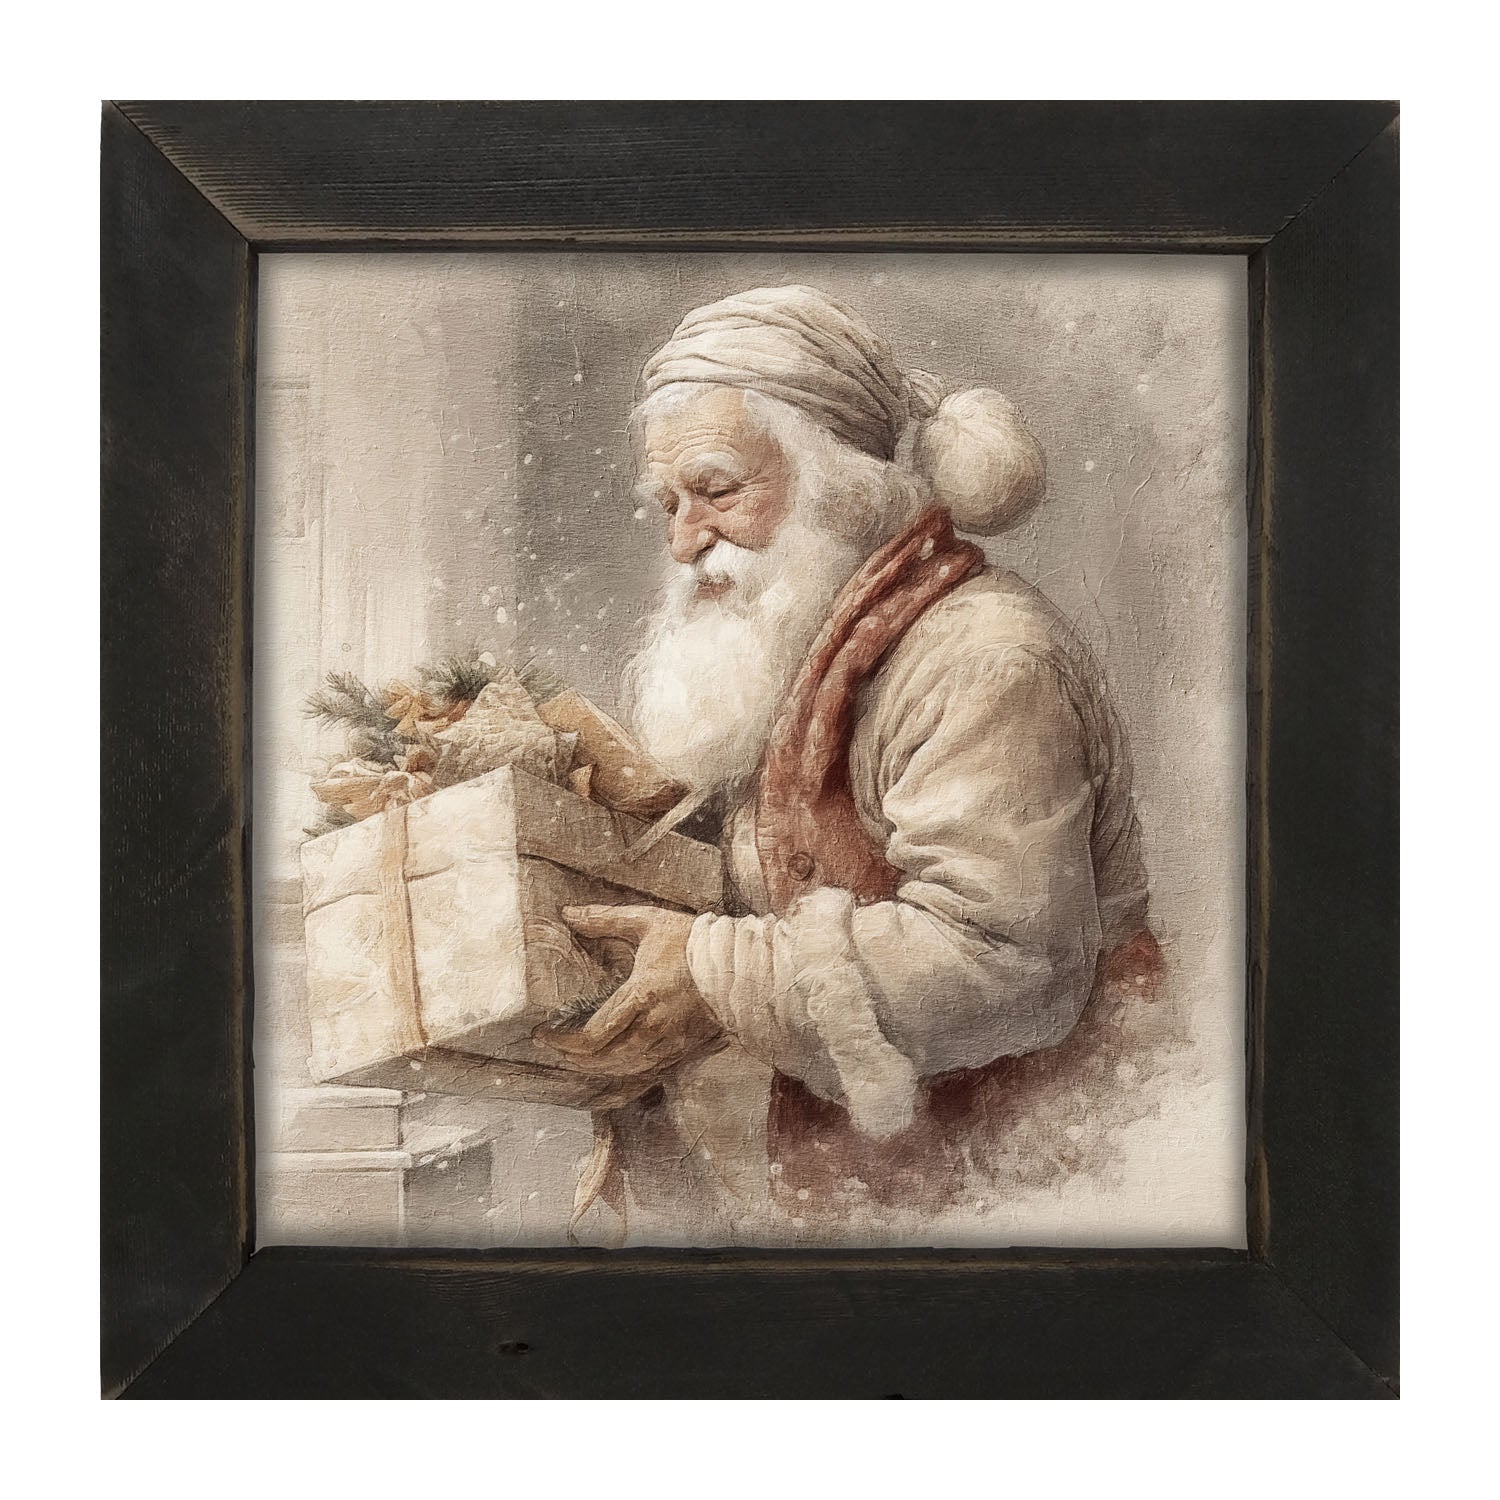 Old world Santa carrying gift